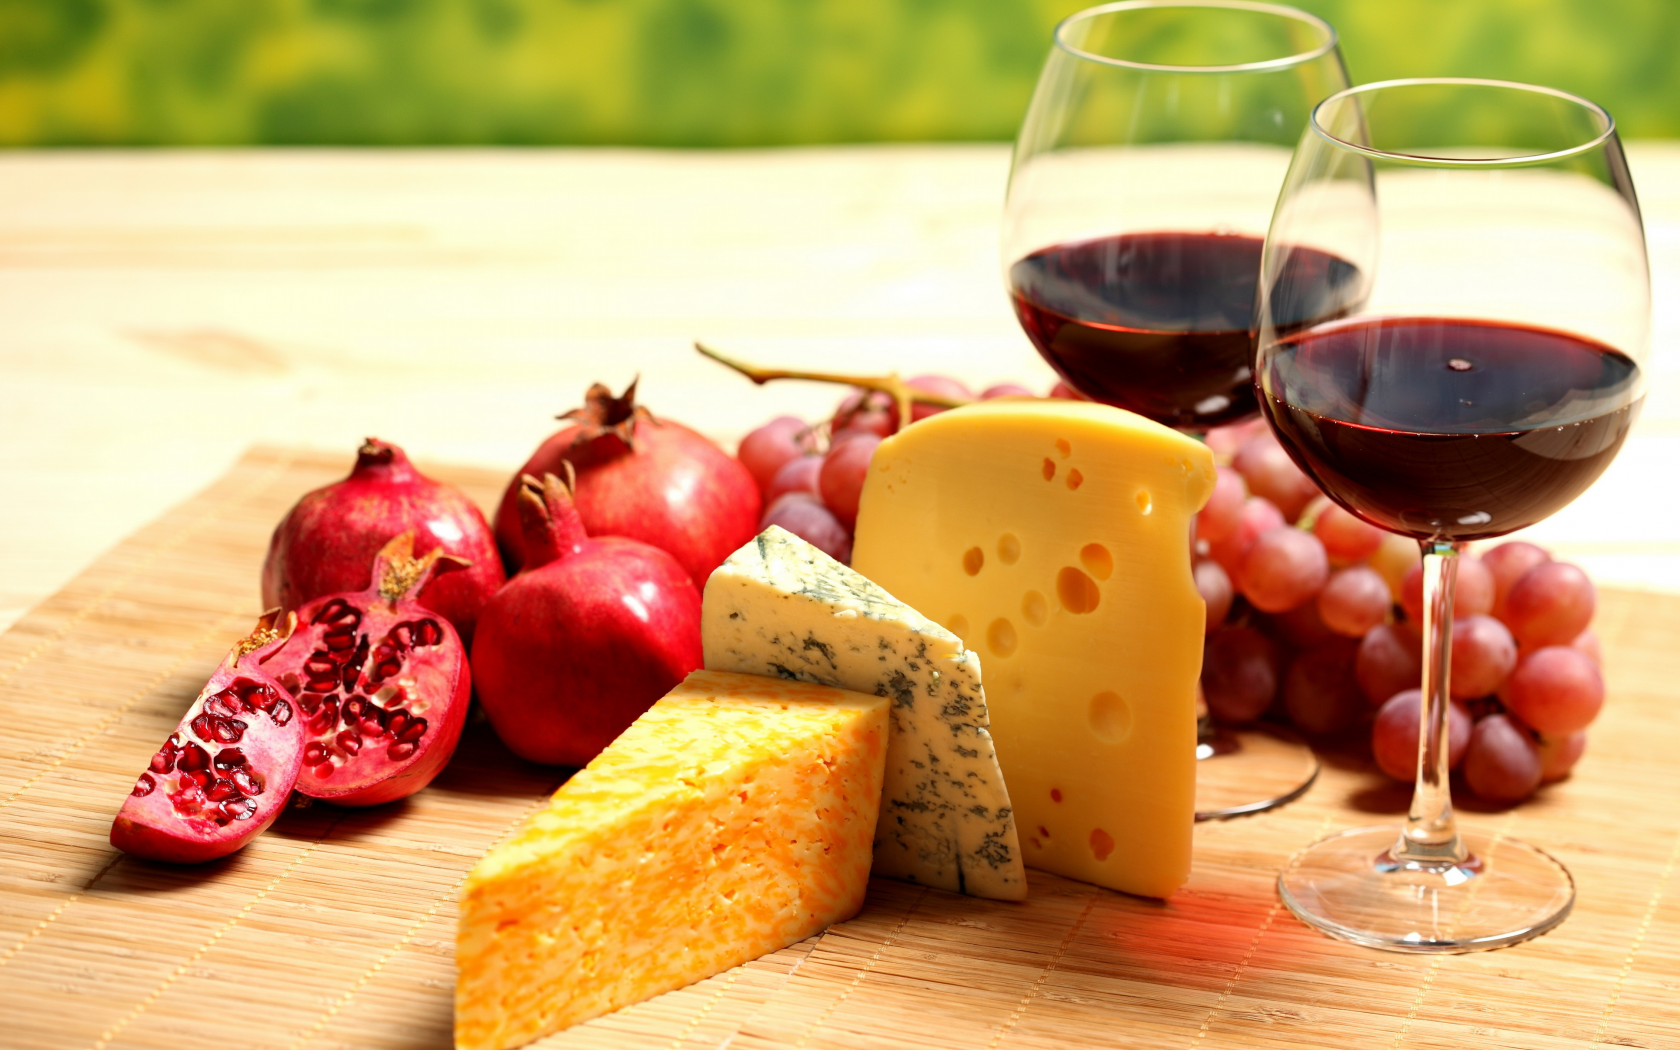 вино, сыр, виноград, гранат, cheese, grapes, wine, red, garnet, room, nice, environment, wood, table, main, room, book, read, vine, see, up, nice, wide